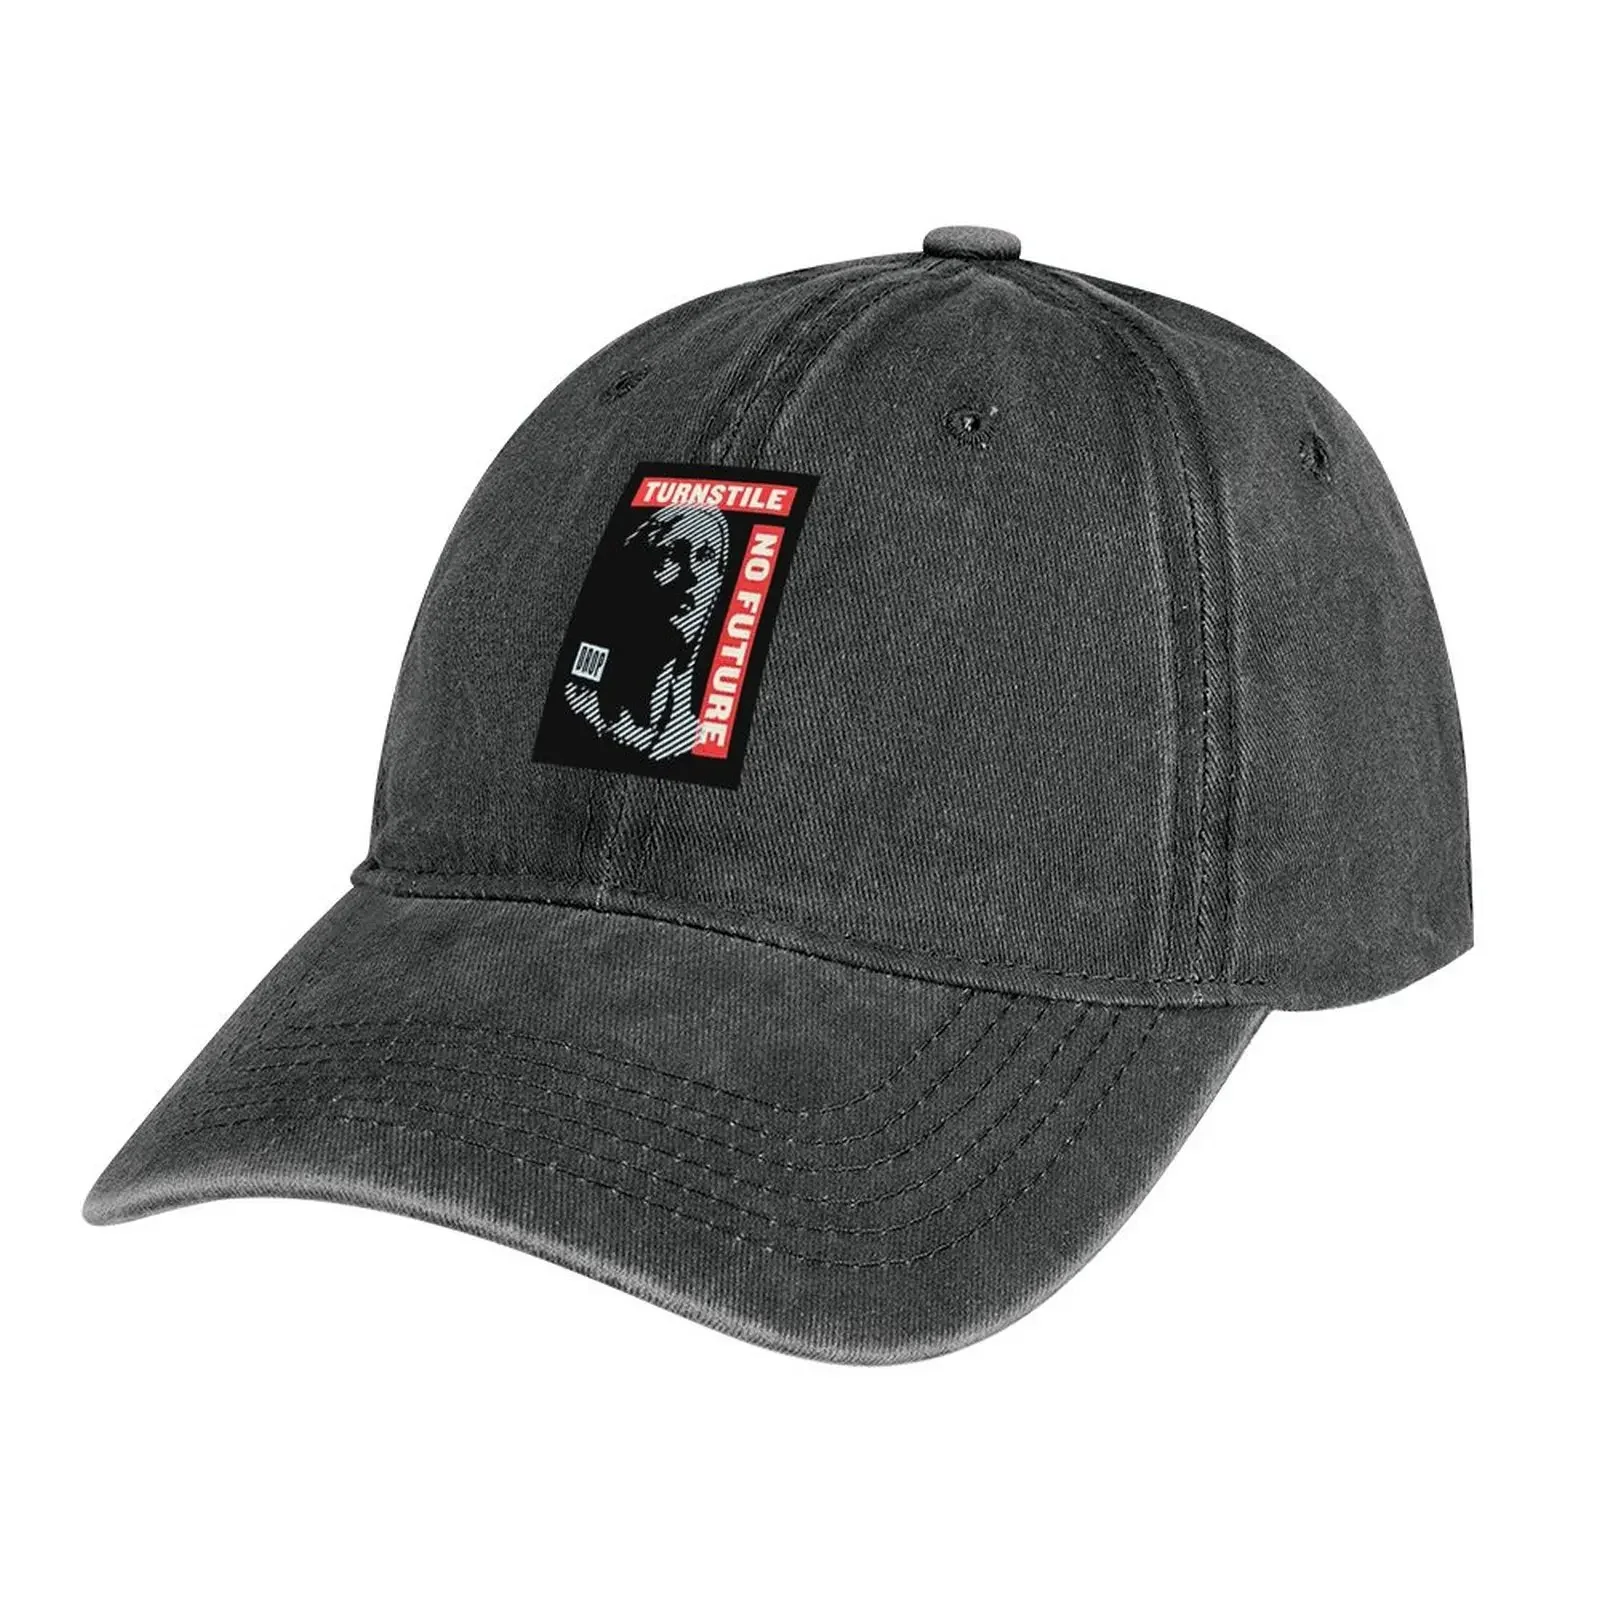 

torniquete-logo popular Camiseta esencial1 Cowboy Hat New Hat Rugby Caps For Women Men's